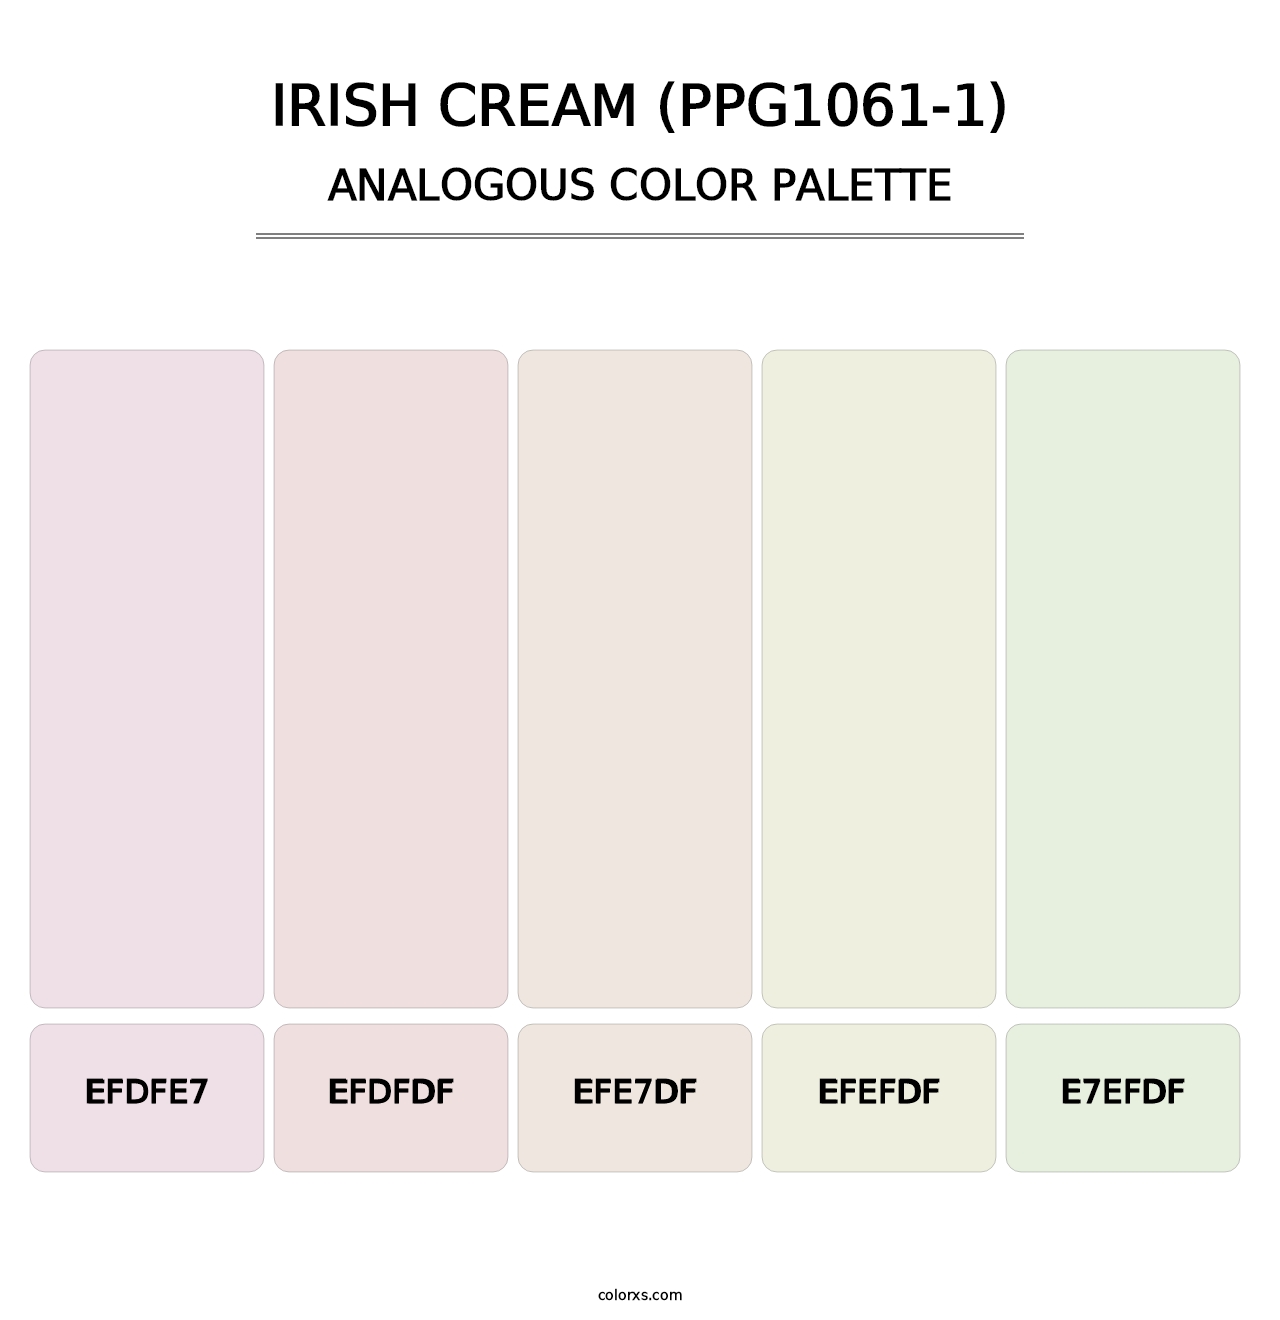 Irish Cream (PPG1061-1) - Analogous Color Palette